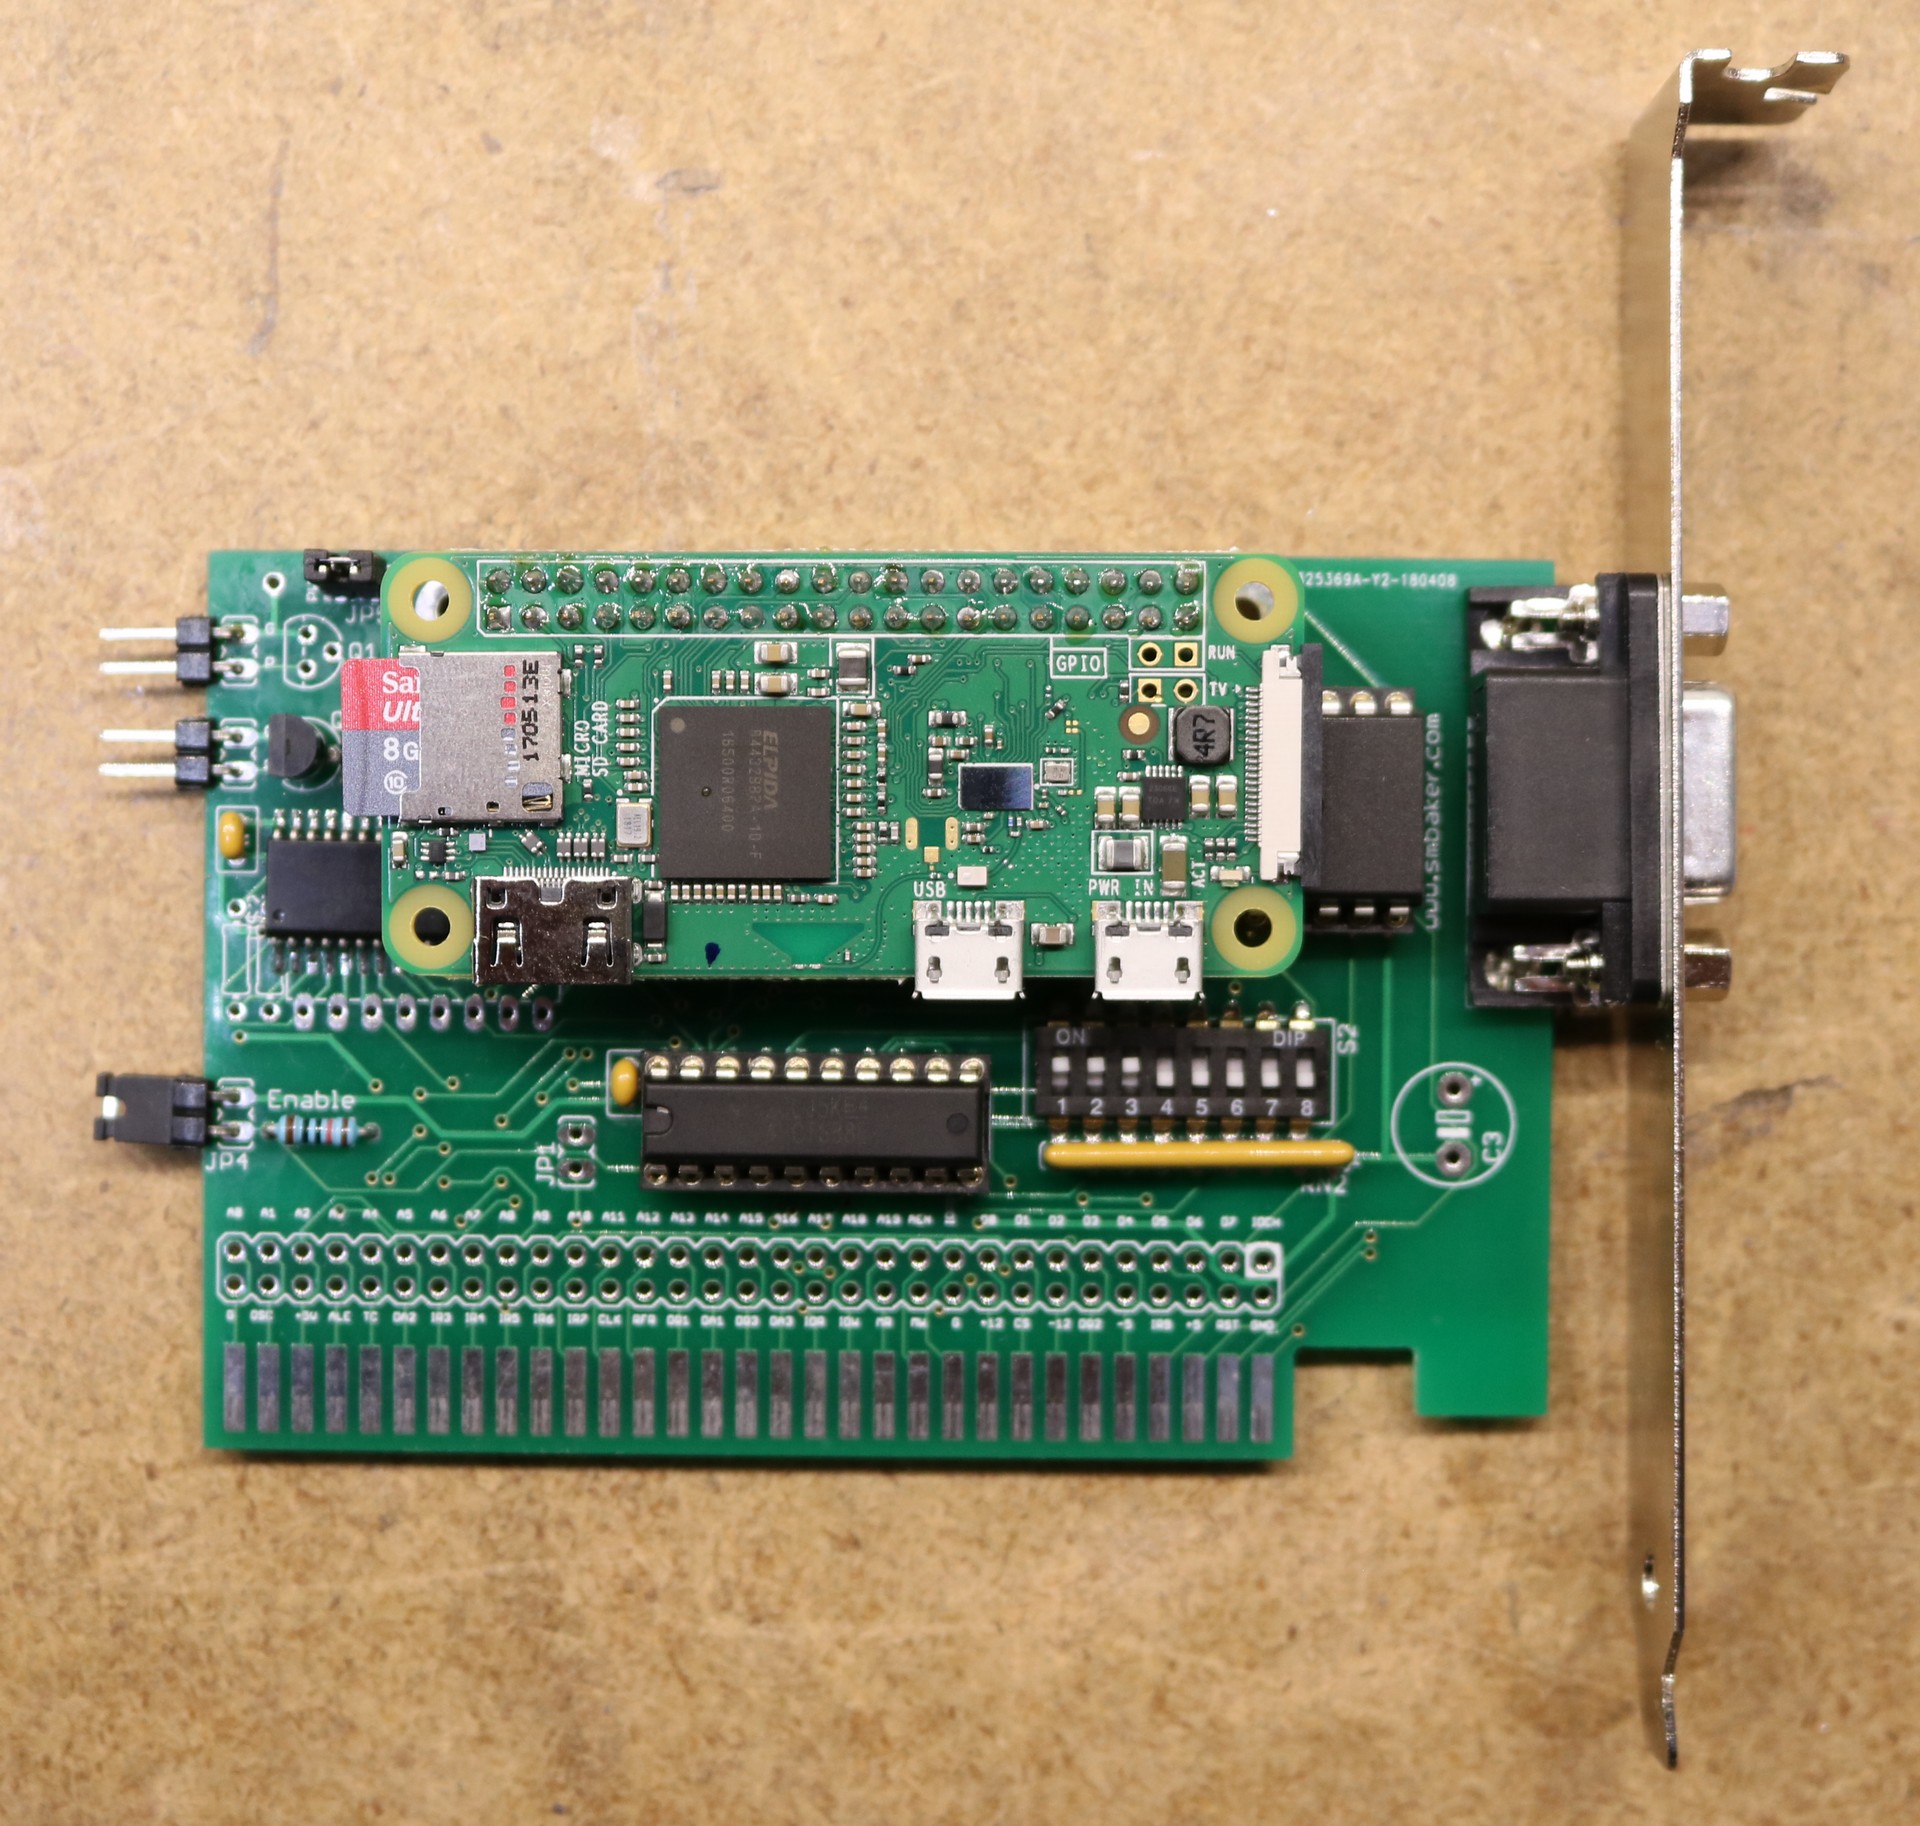 Custom Pcb Isa Card Uses A Raspberry Pi Zero W To Provide A Server